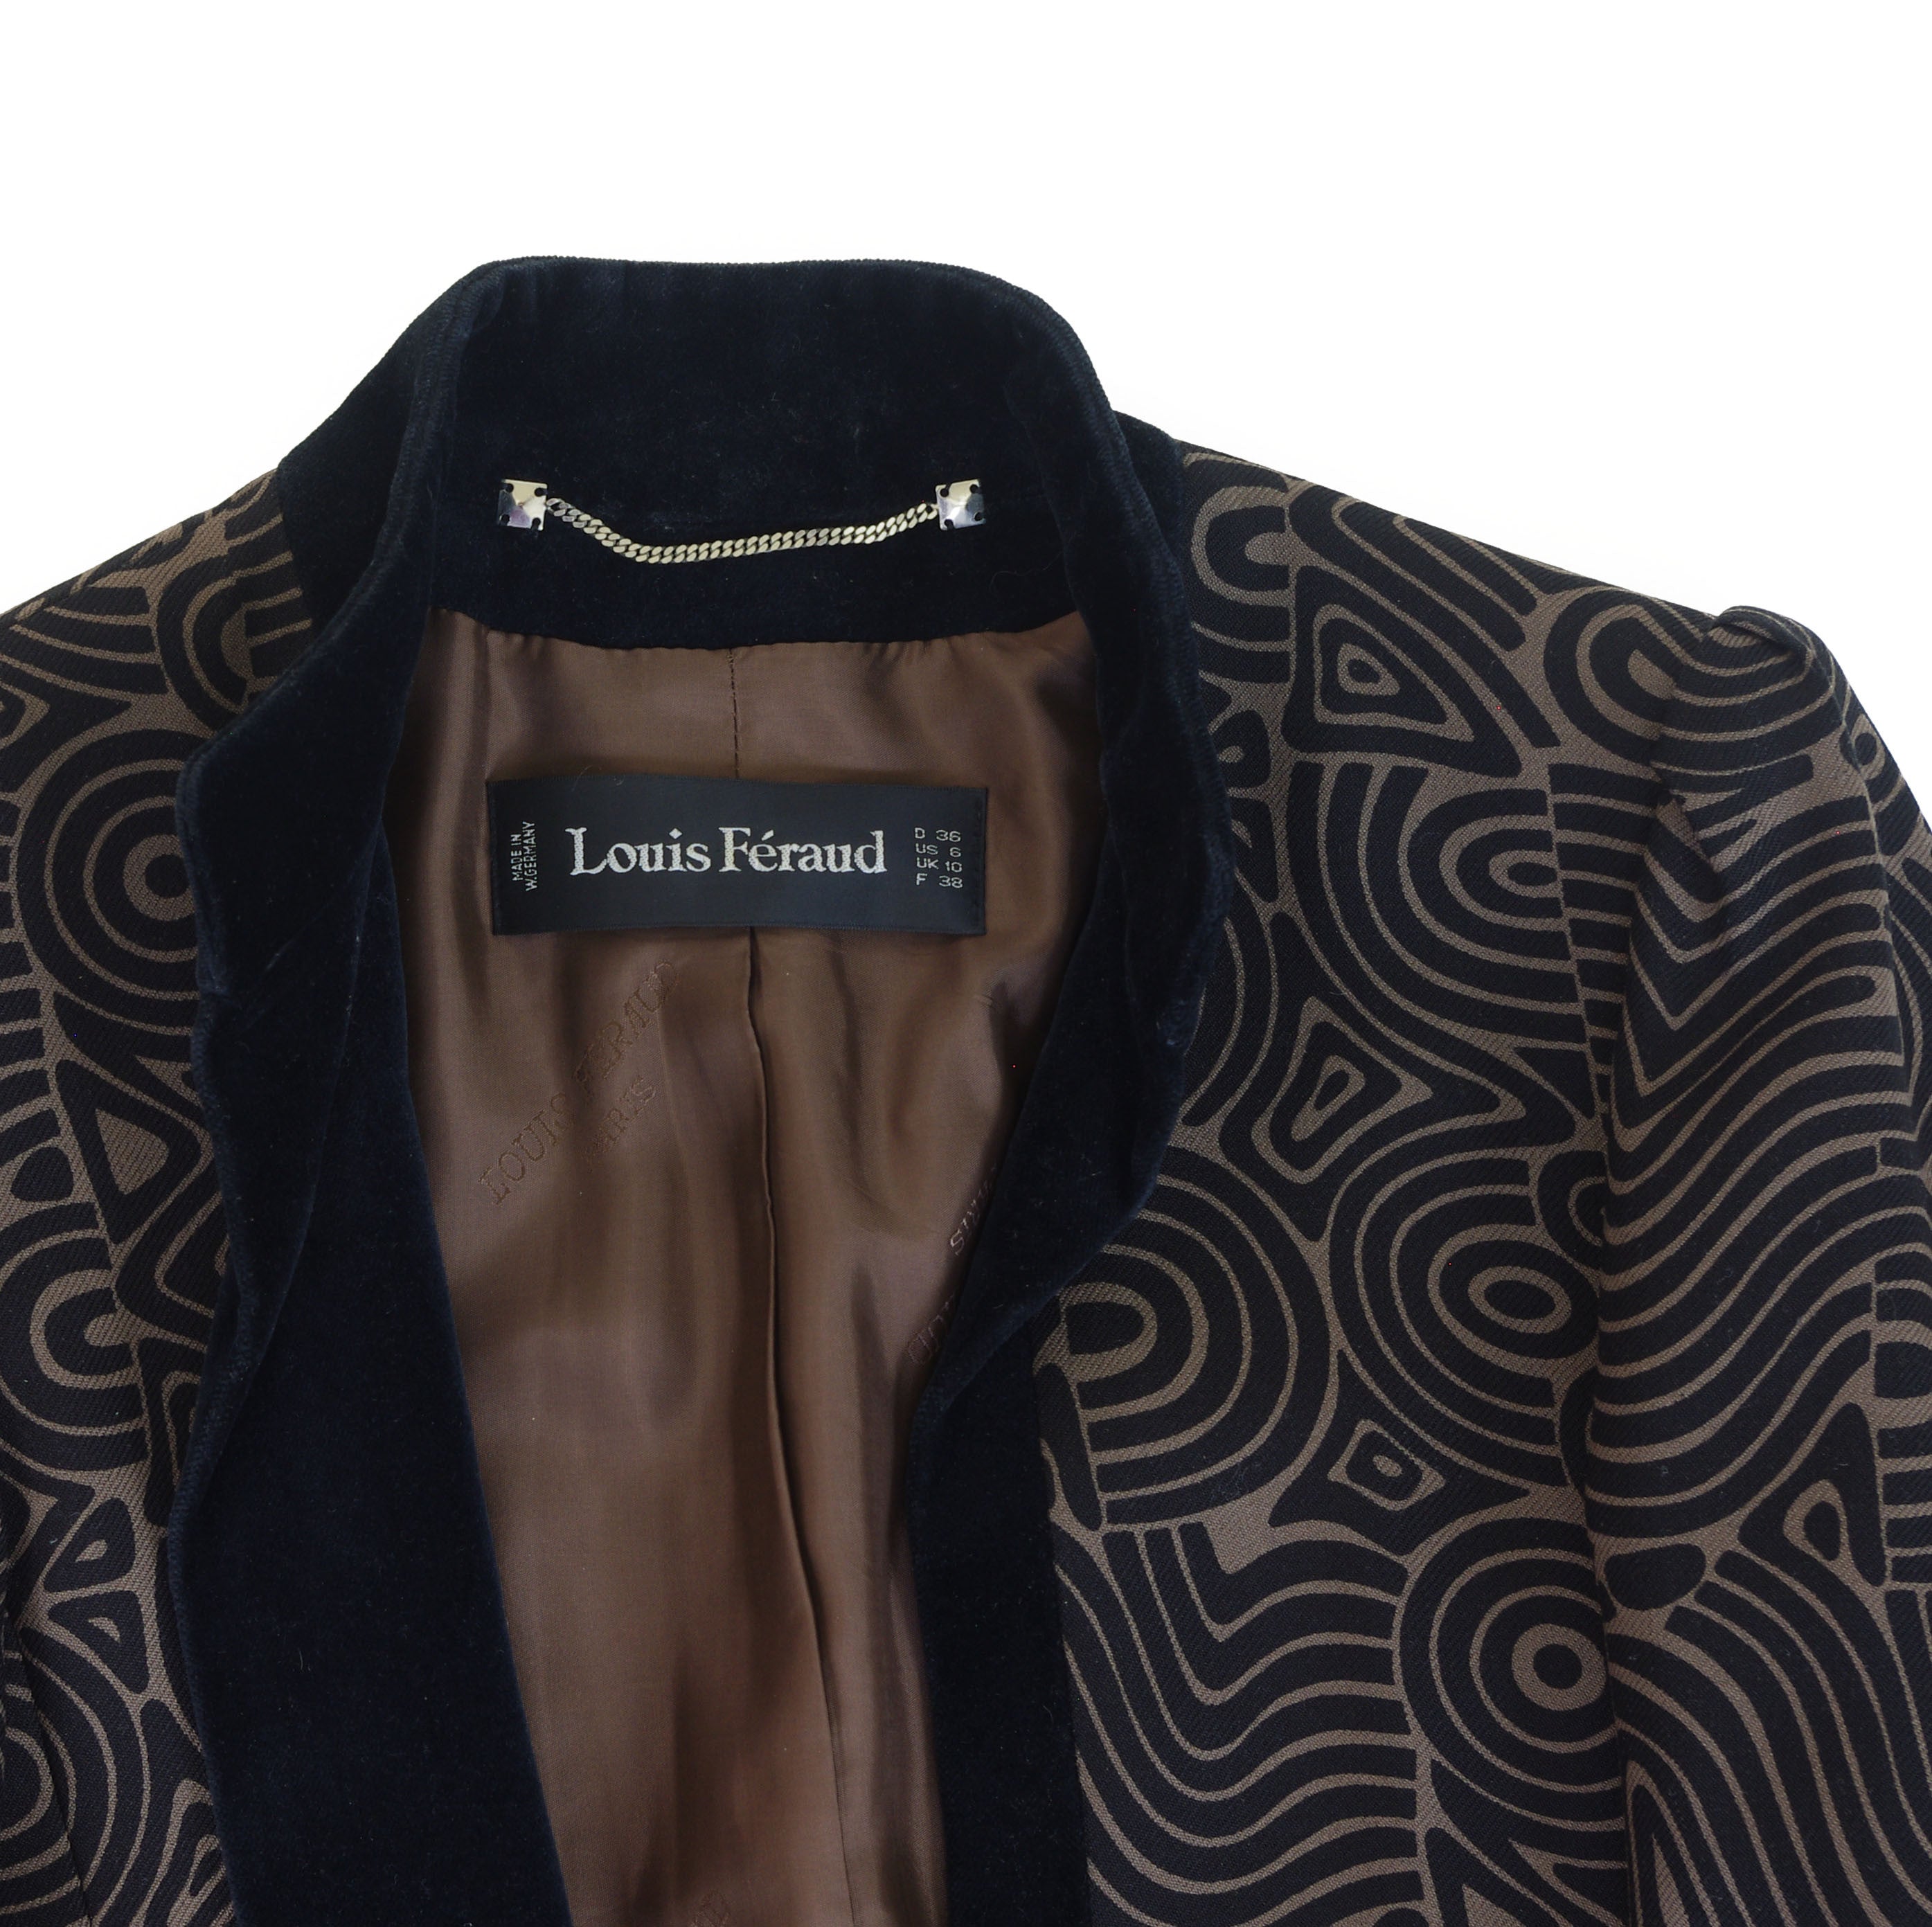 1970s Brown & Black Abstract Wool Jacket